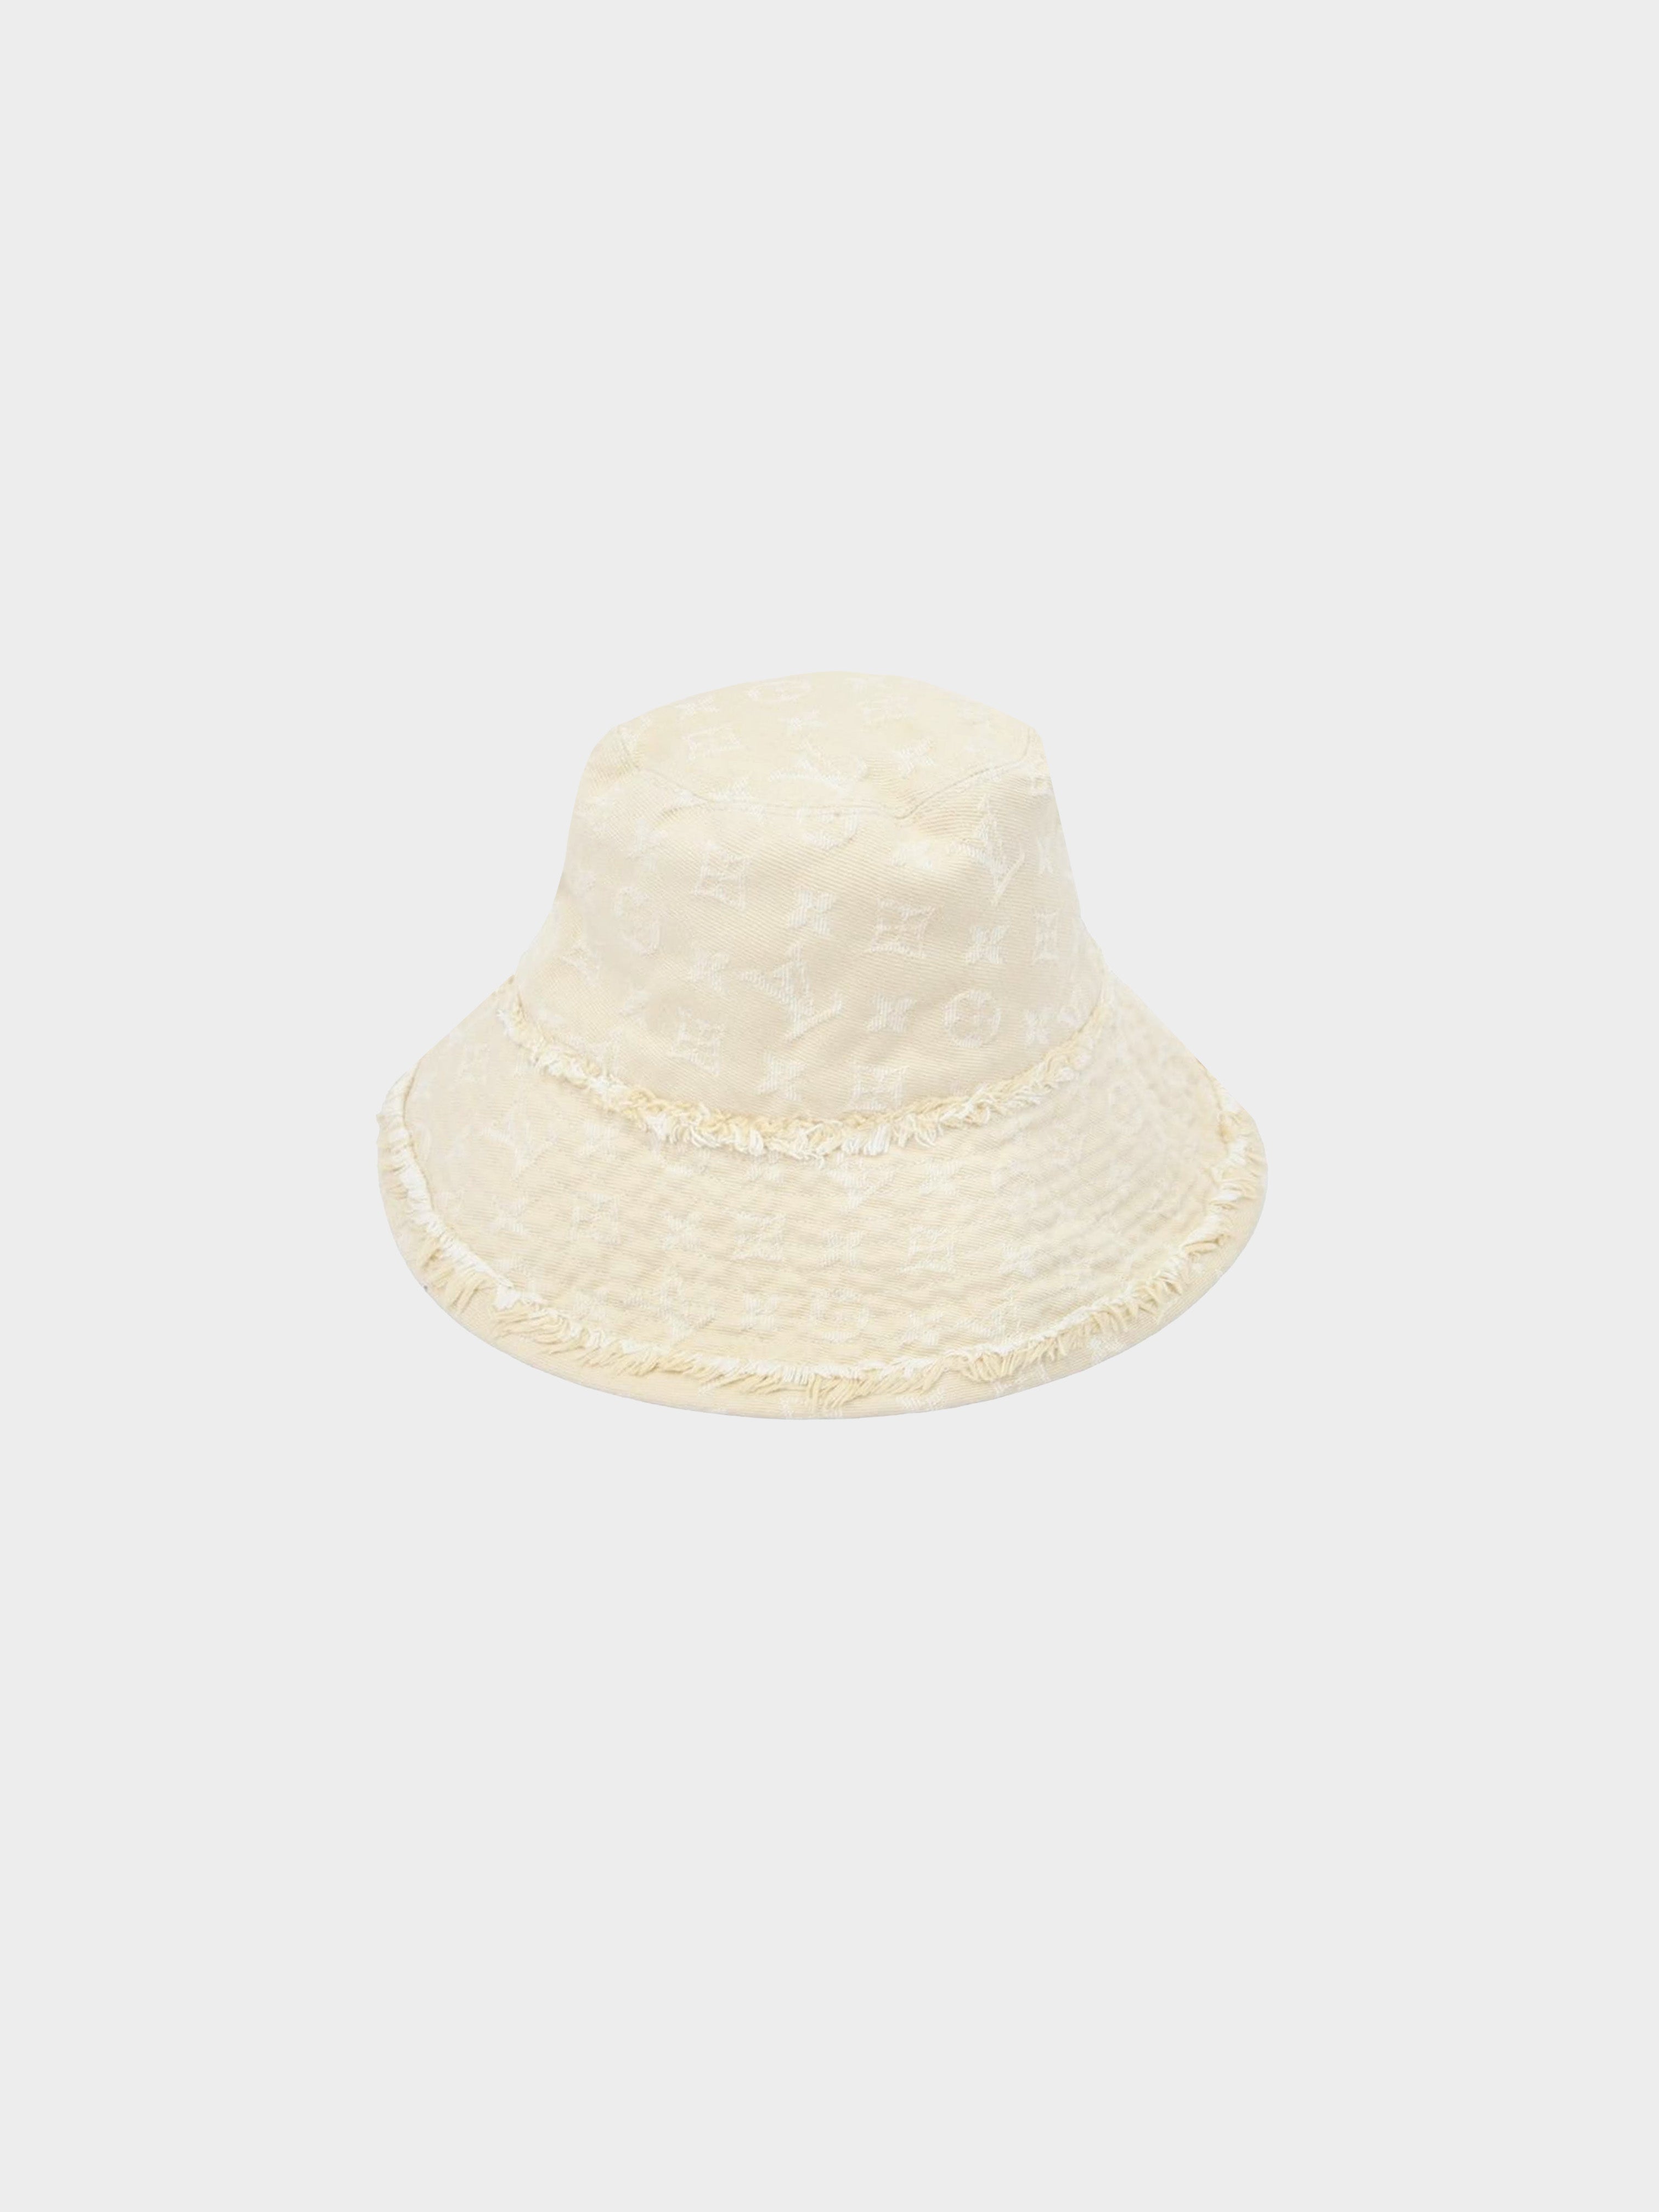 Shop Louis Vuitton Unisex Street Style Bucket Hats Wide-brimmed